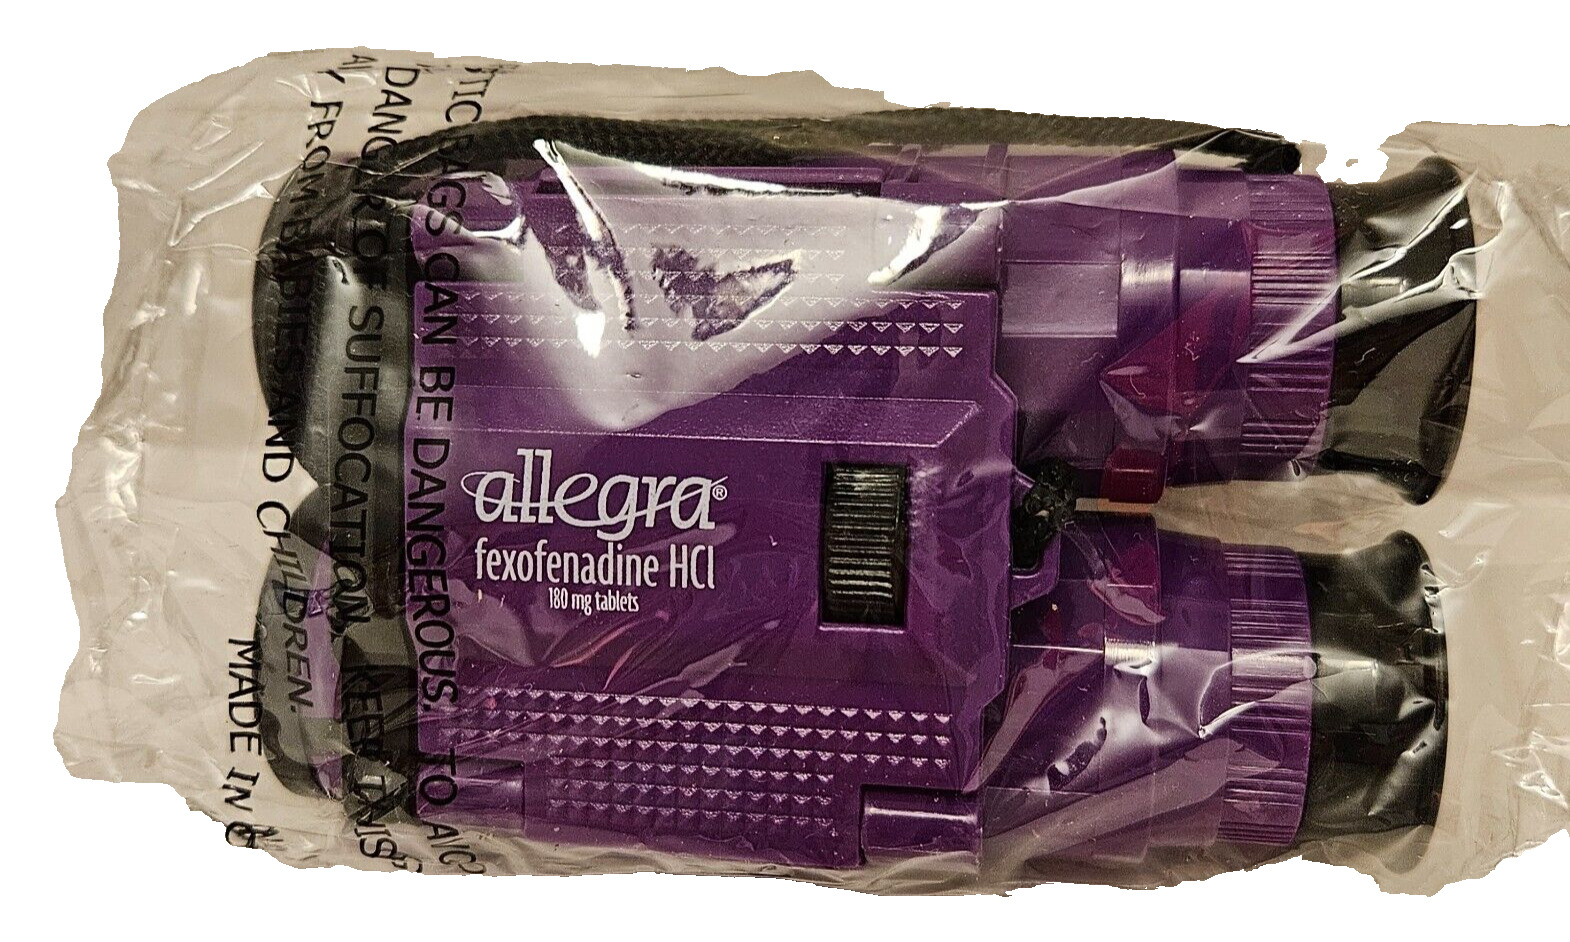 4x28mm Collectible Binoculars Allergy Medicine Allegra Pharmaceutical Drug Rep